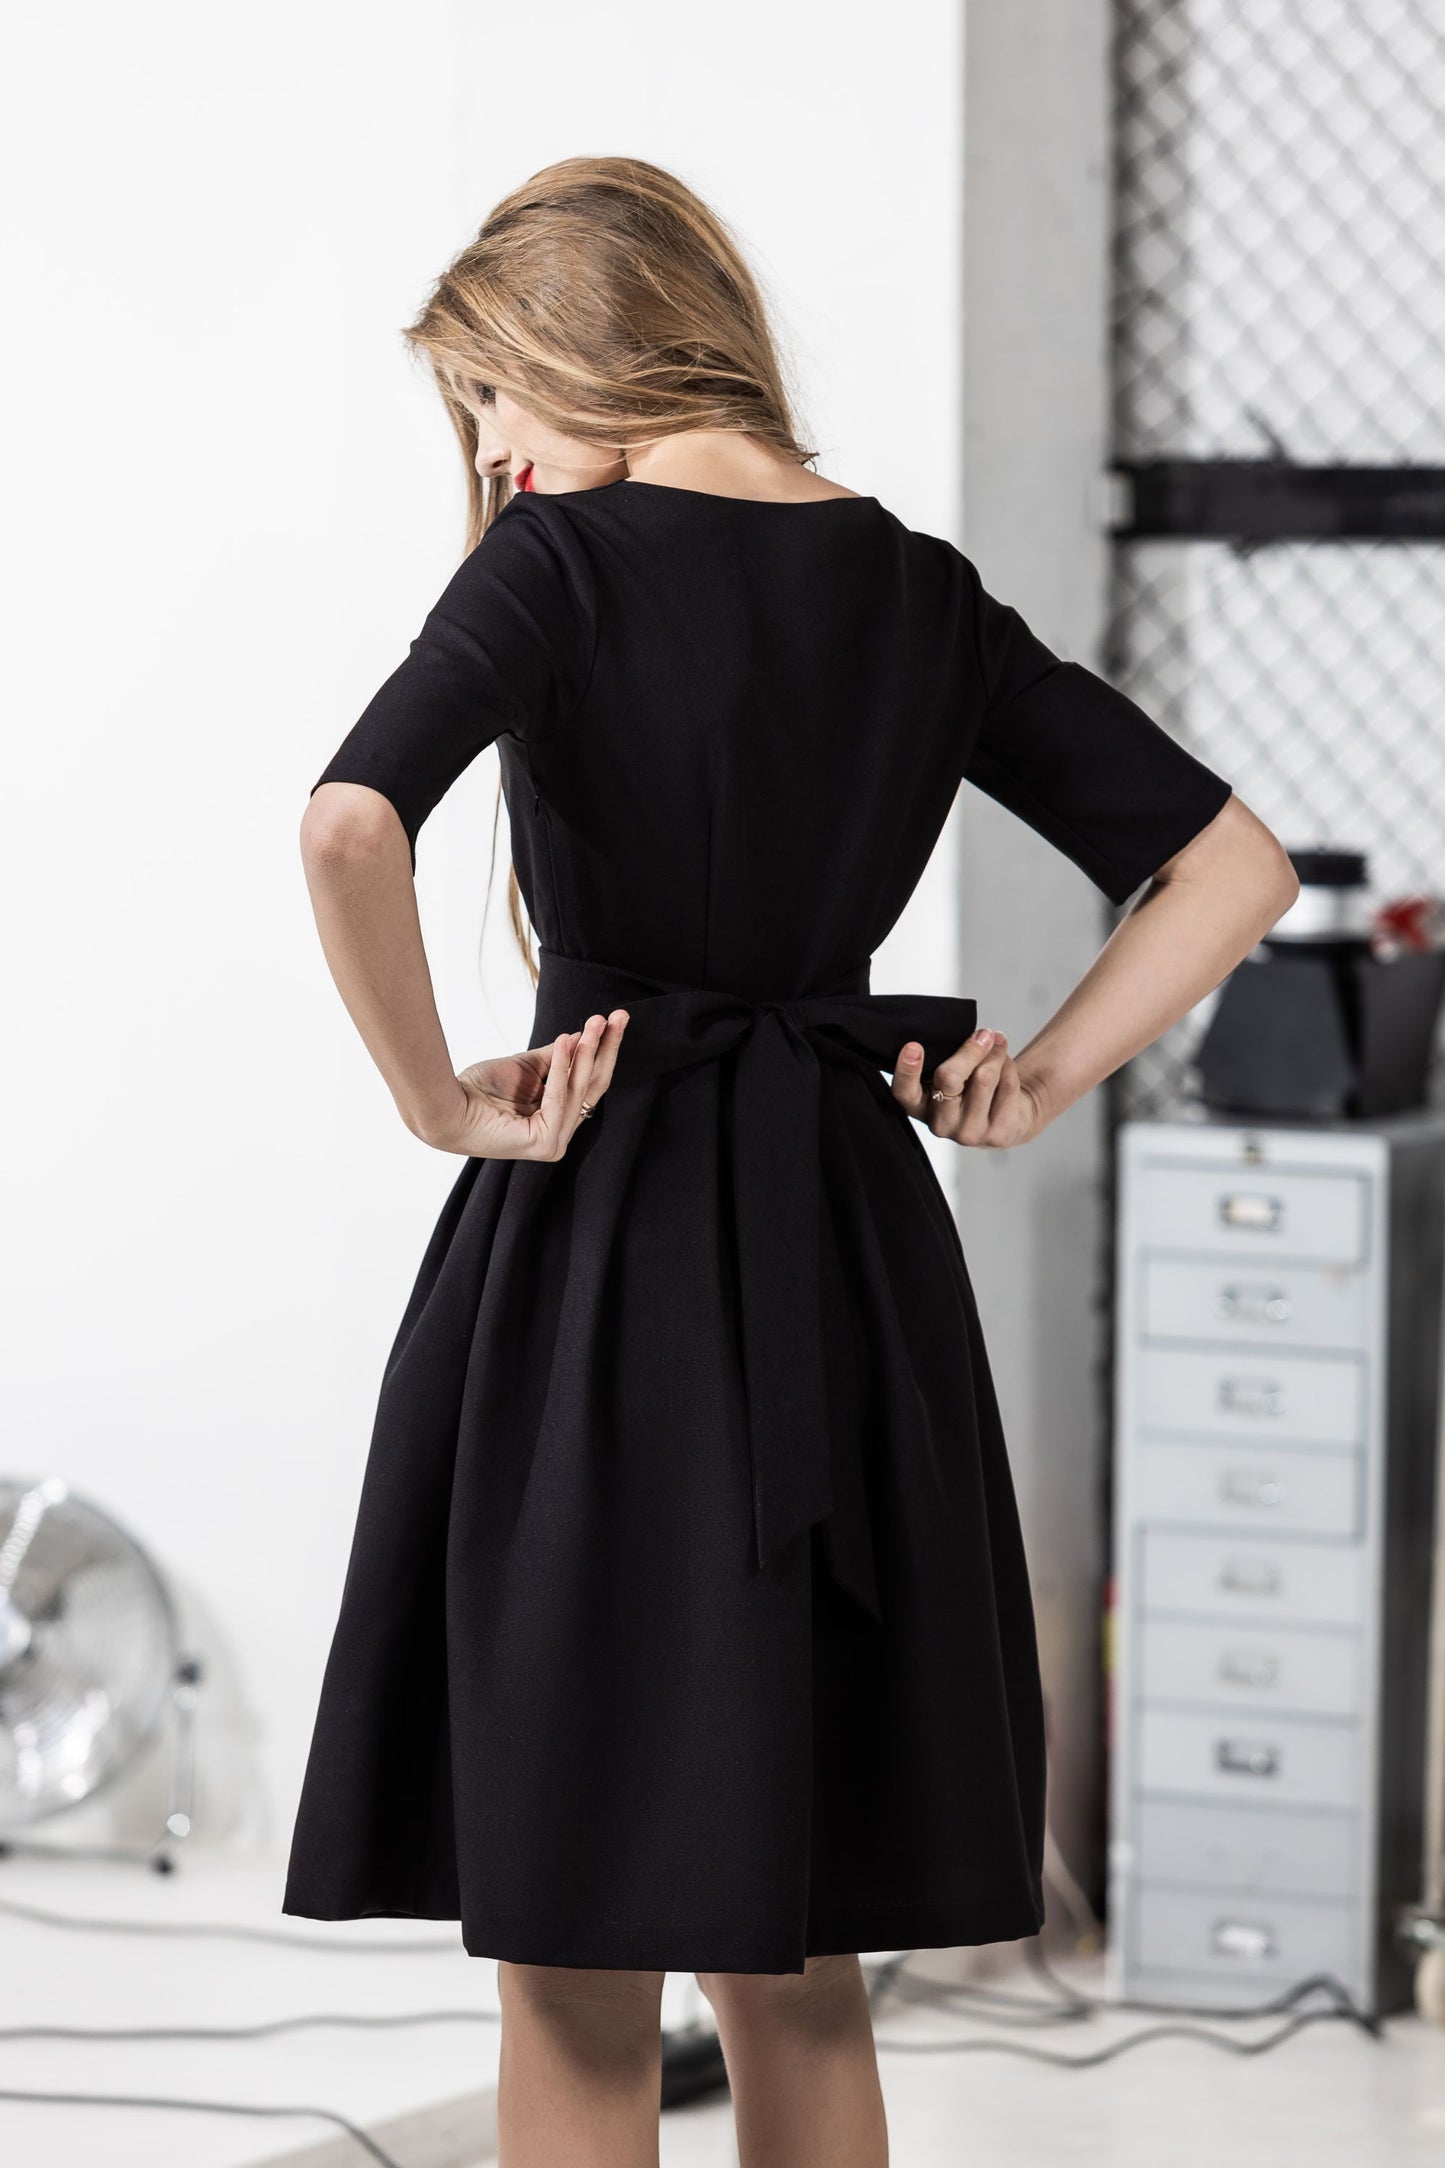 Black dress with pleats